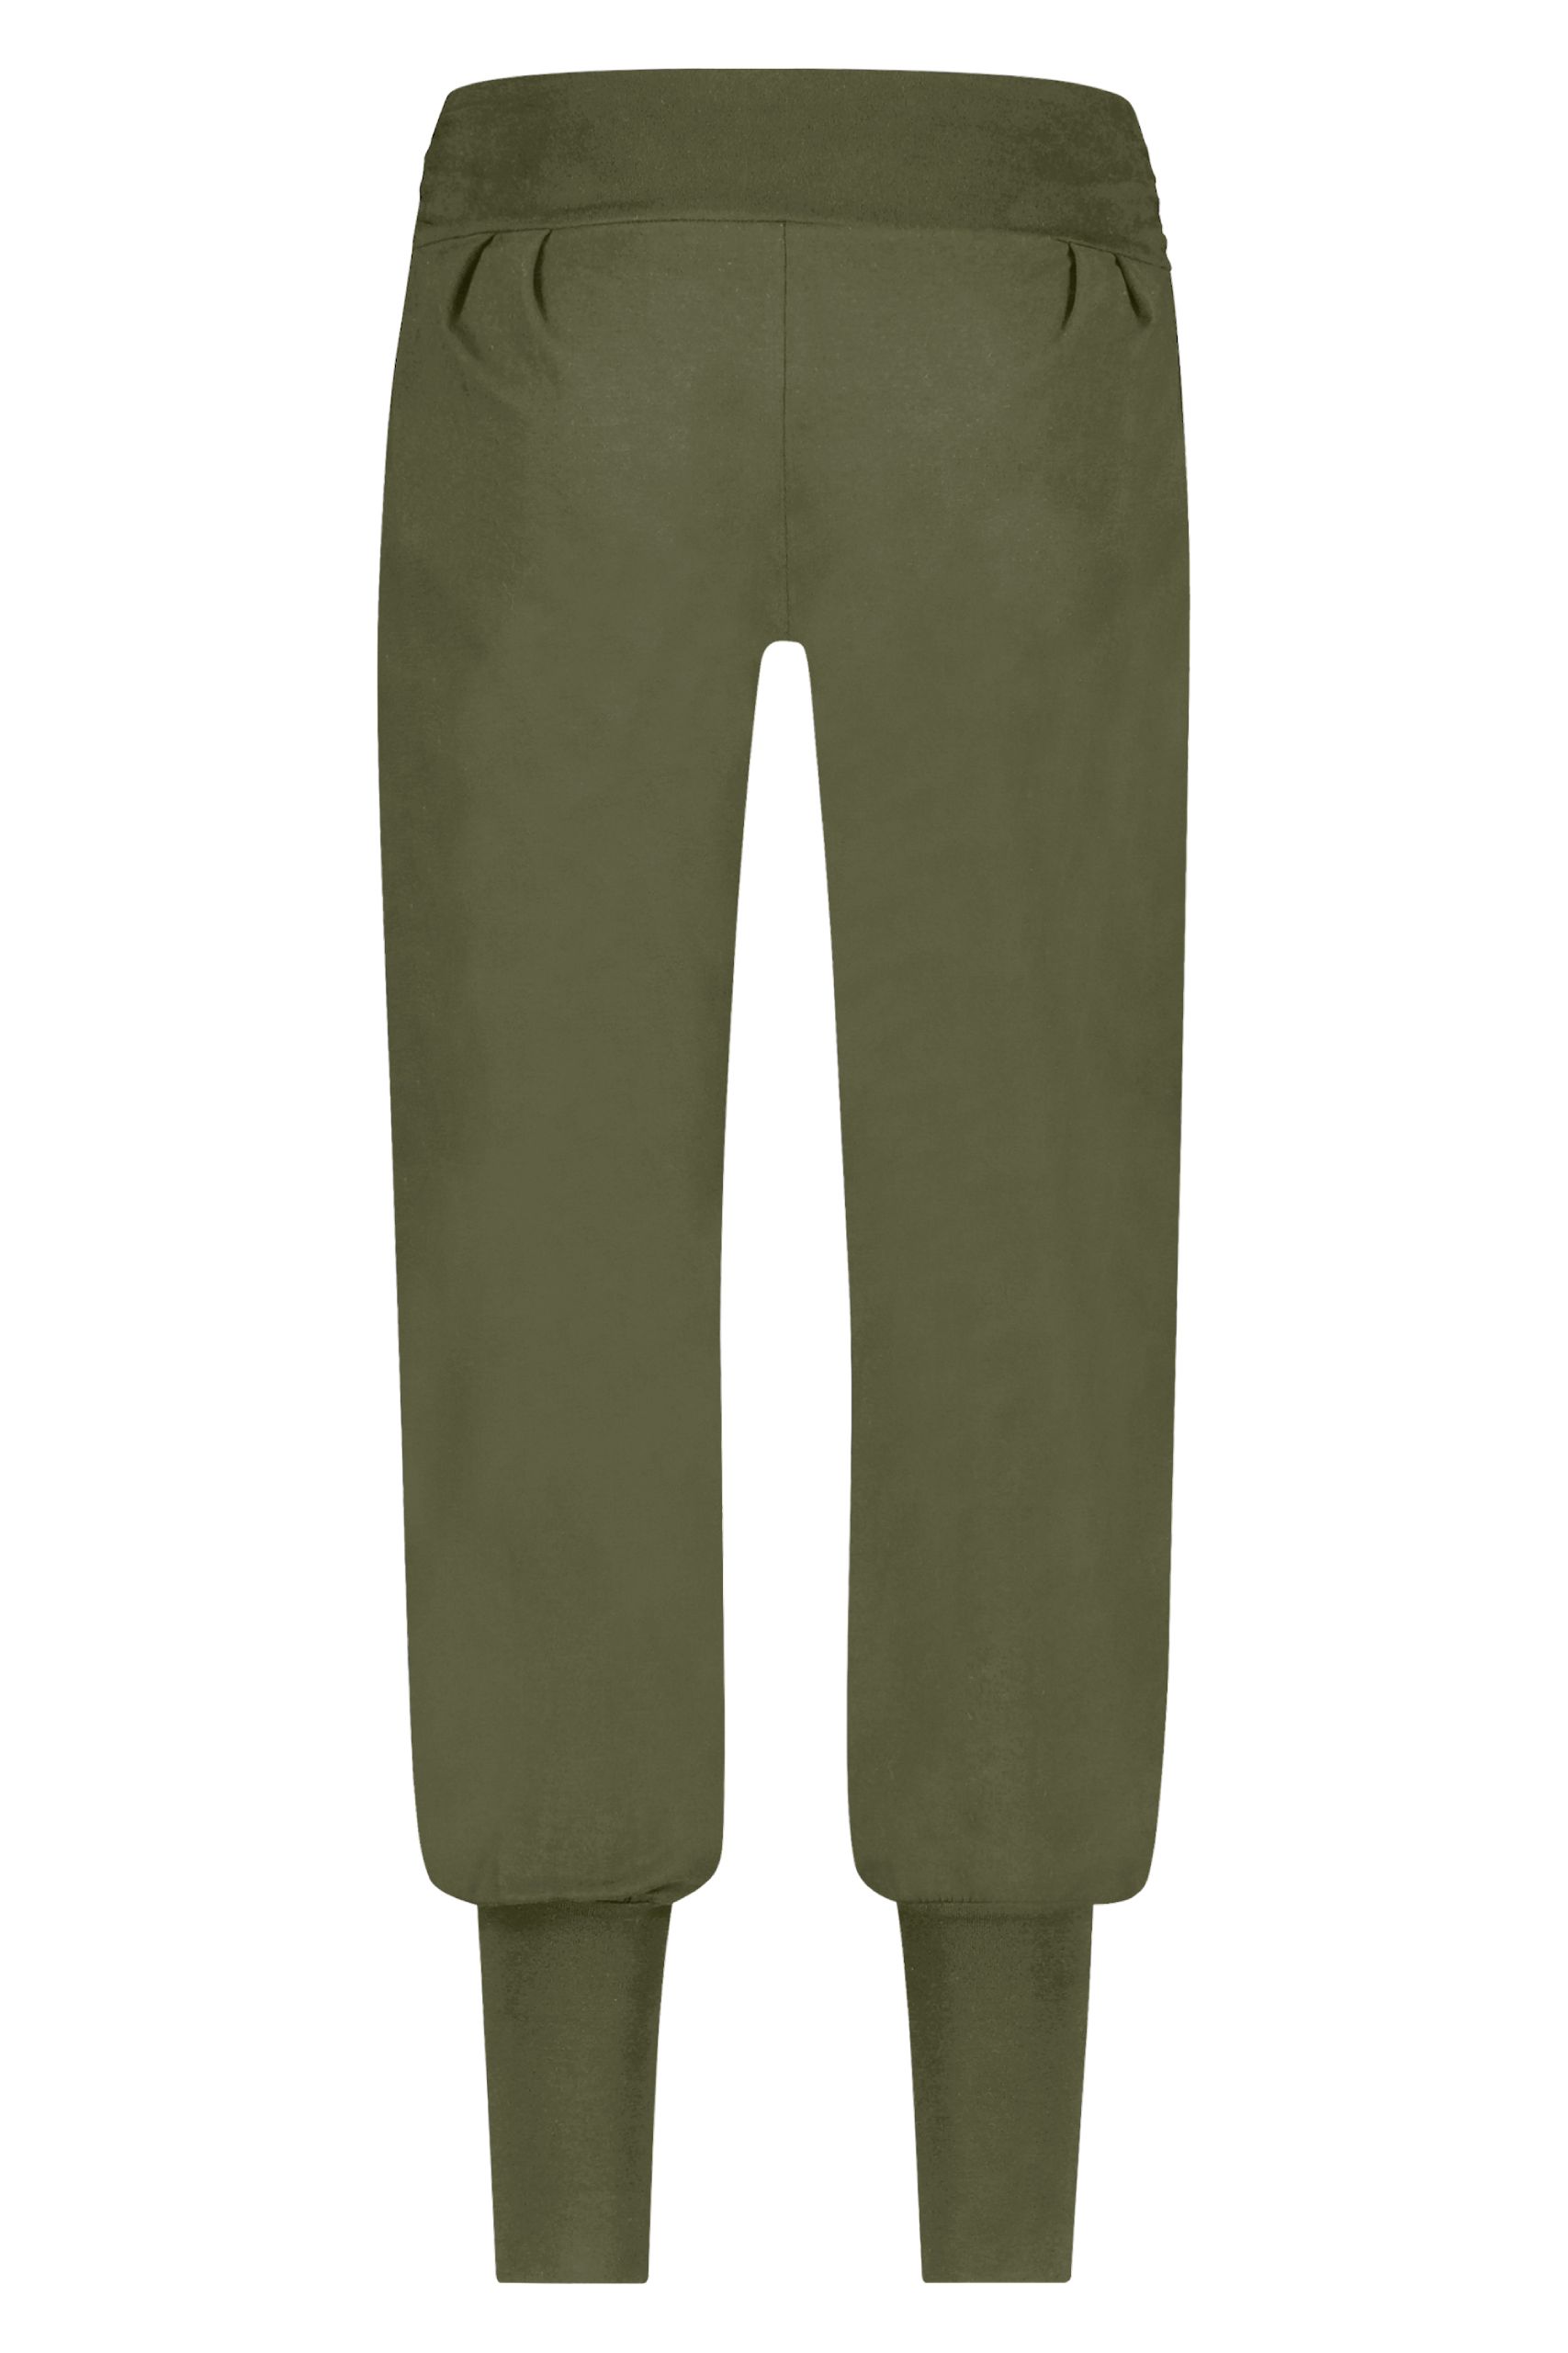 Plain Green Harem Pants Women Comfy Loungewear Loose Yoga Pants